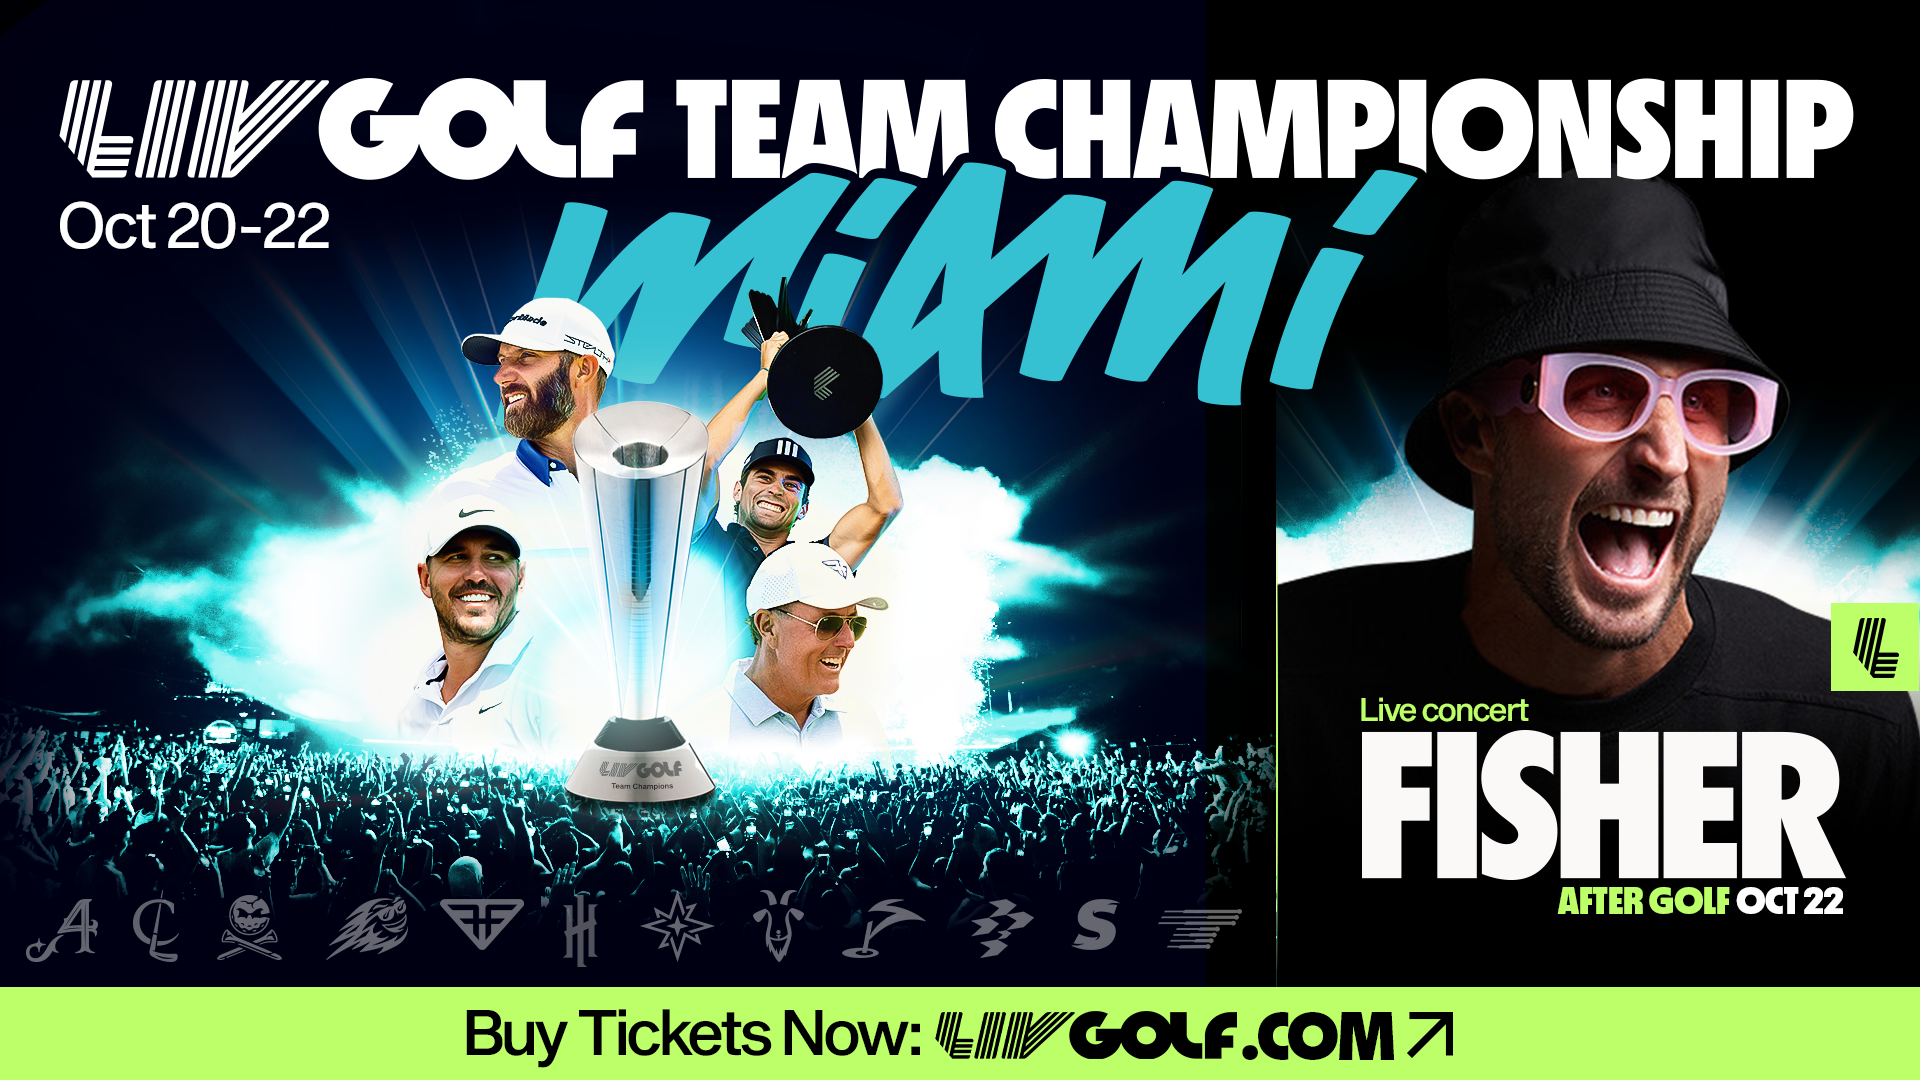 Miami Team Championship Tickets on sale; FISHER concert LIV Golf